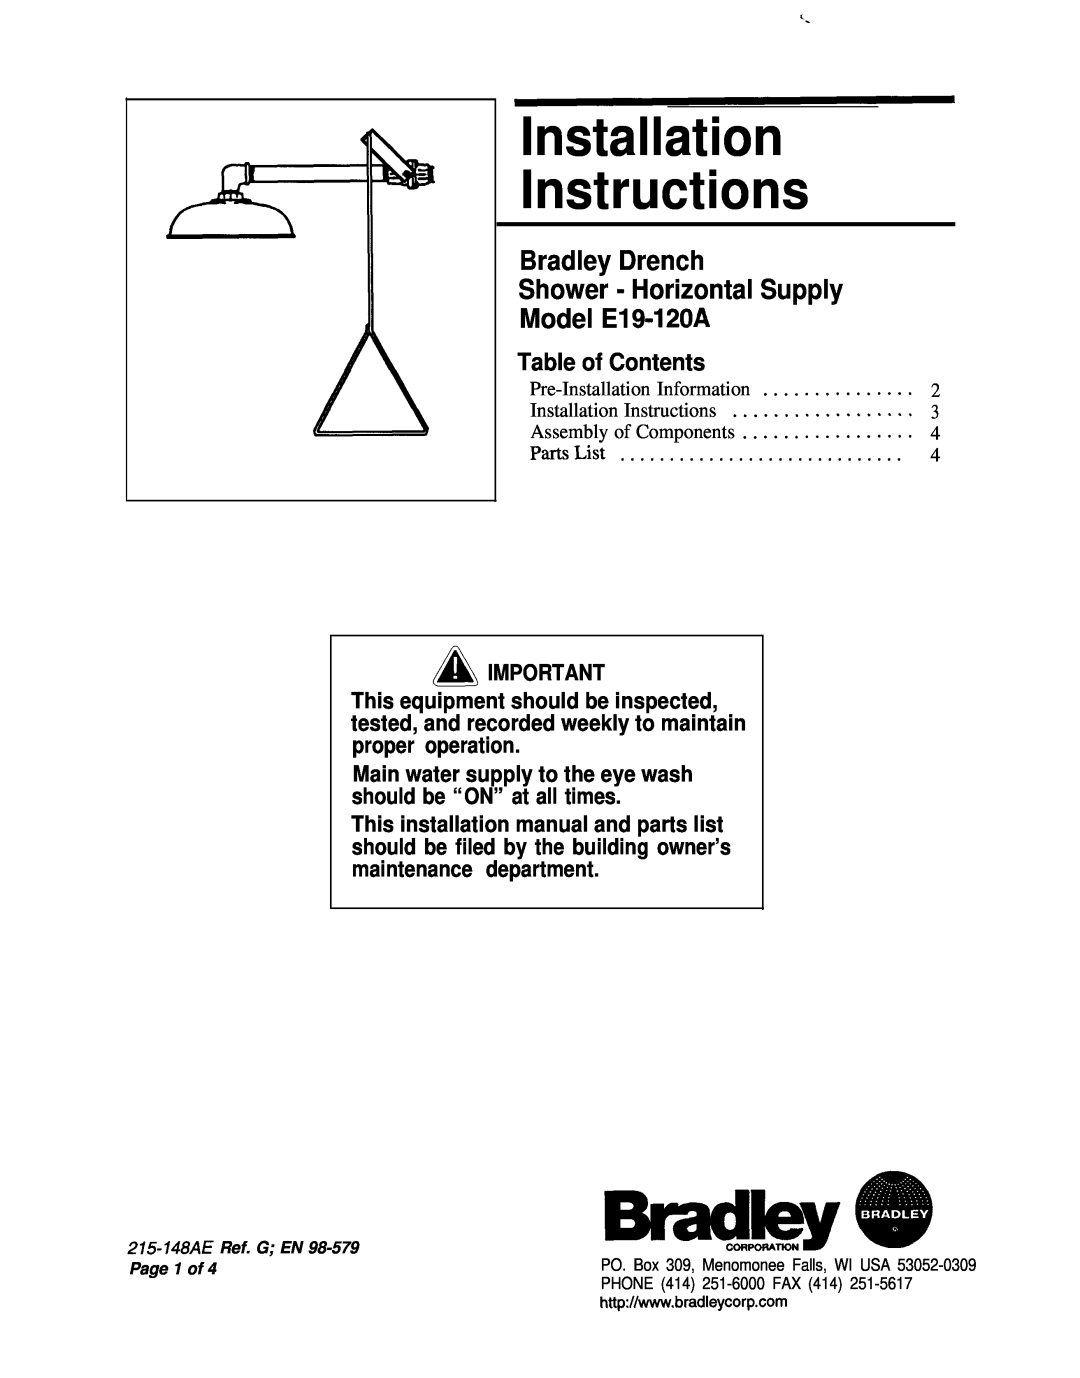 Bradley Smoker E19-120A installation instructions Table of Contents, Installation Instructions 